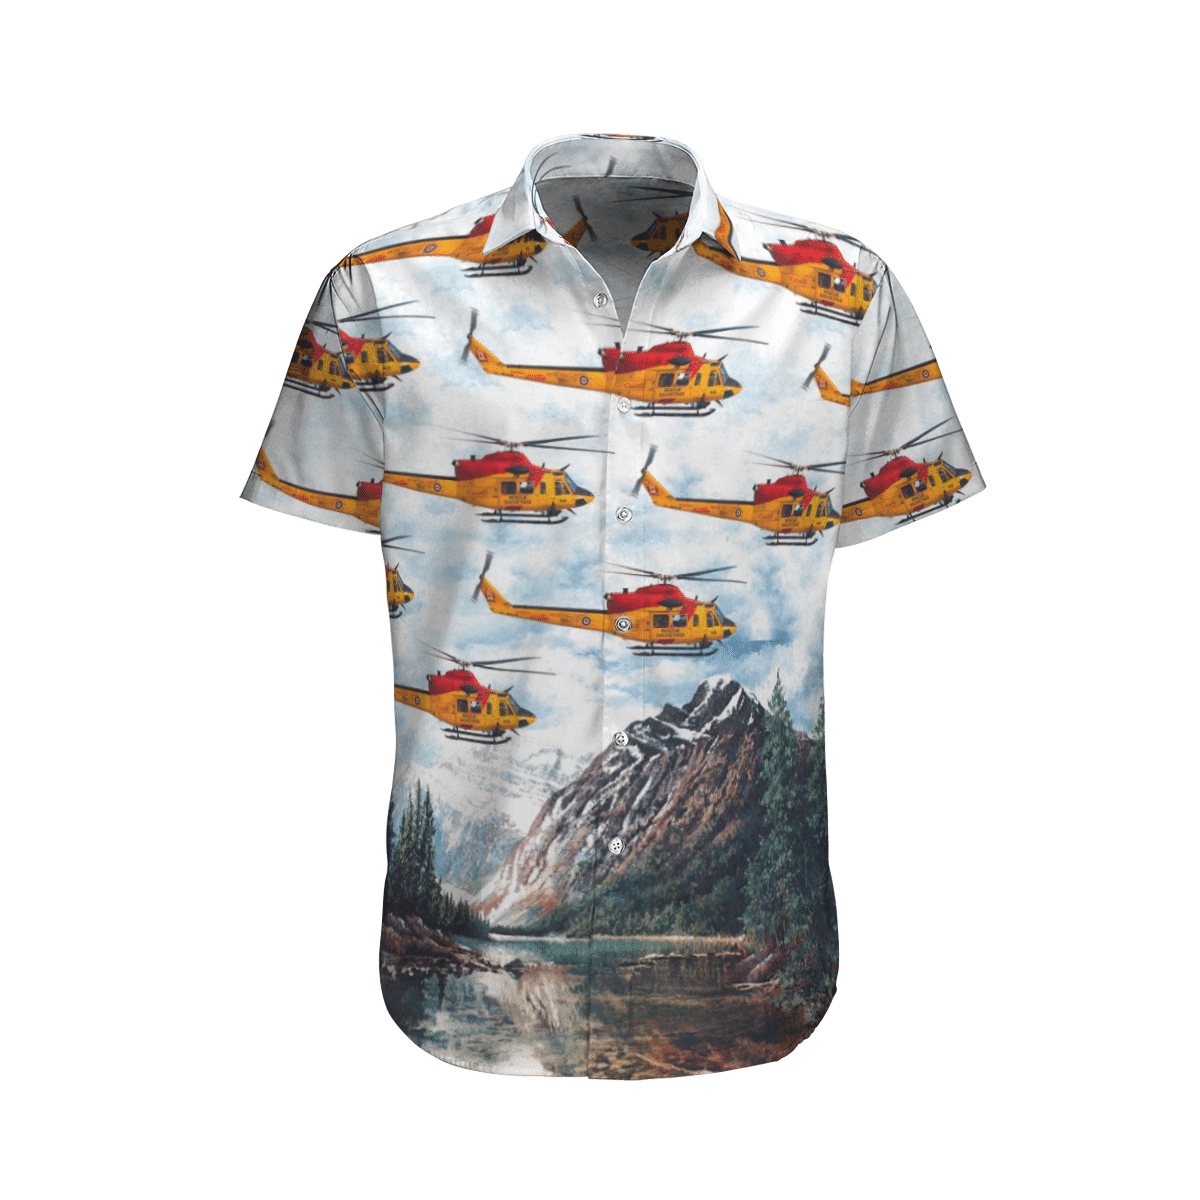 Enjoy your summer with top cool hawaiian shirt below 200